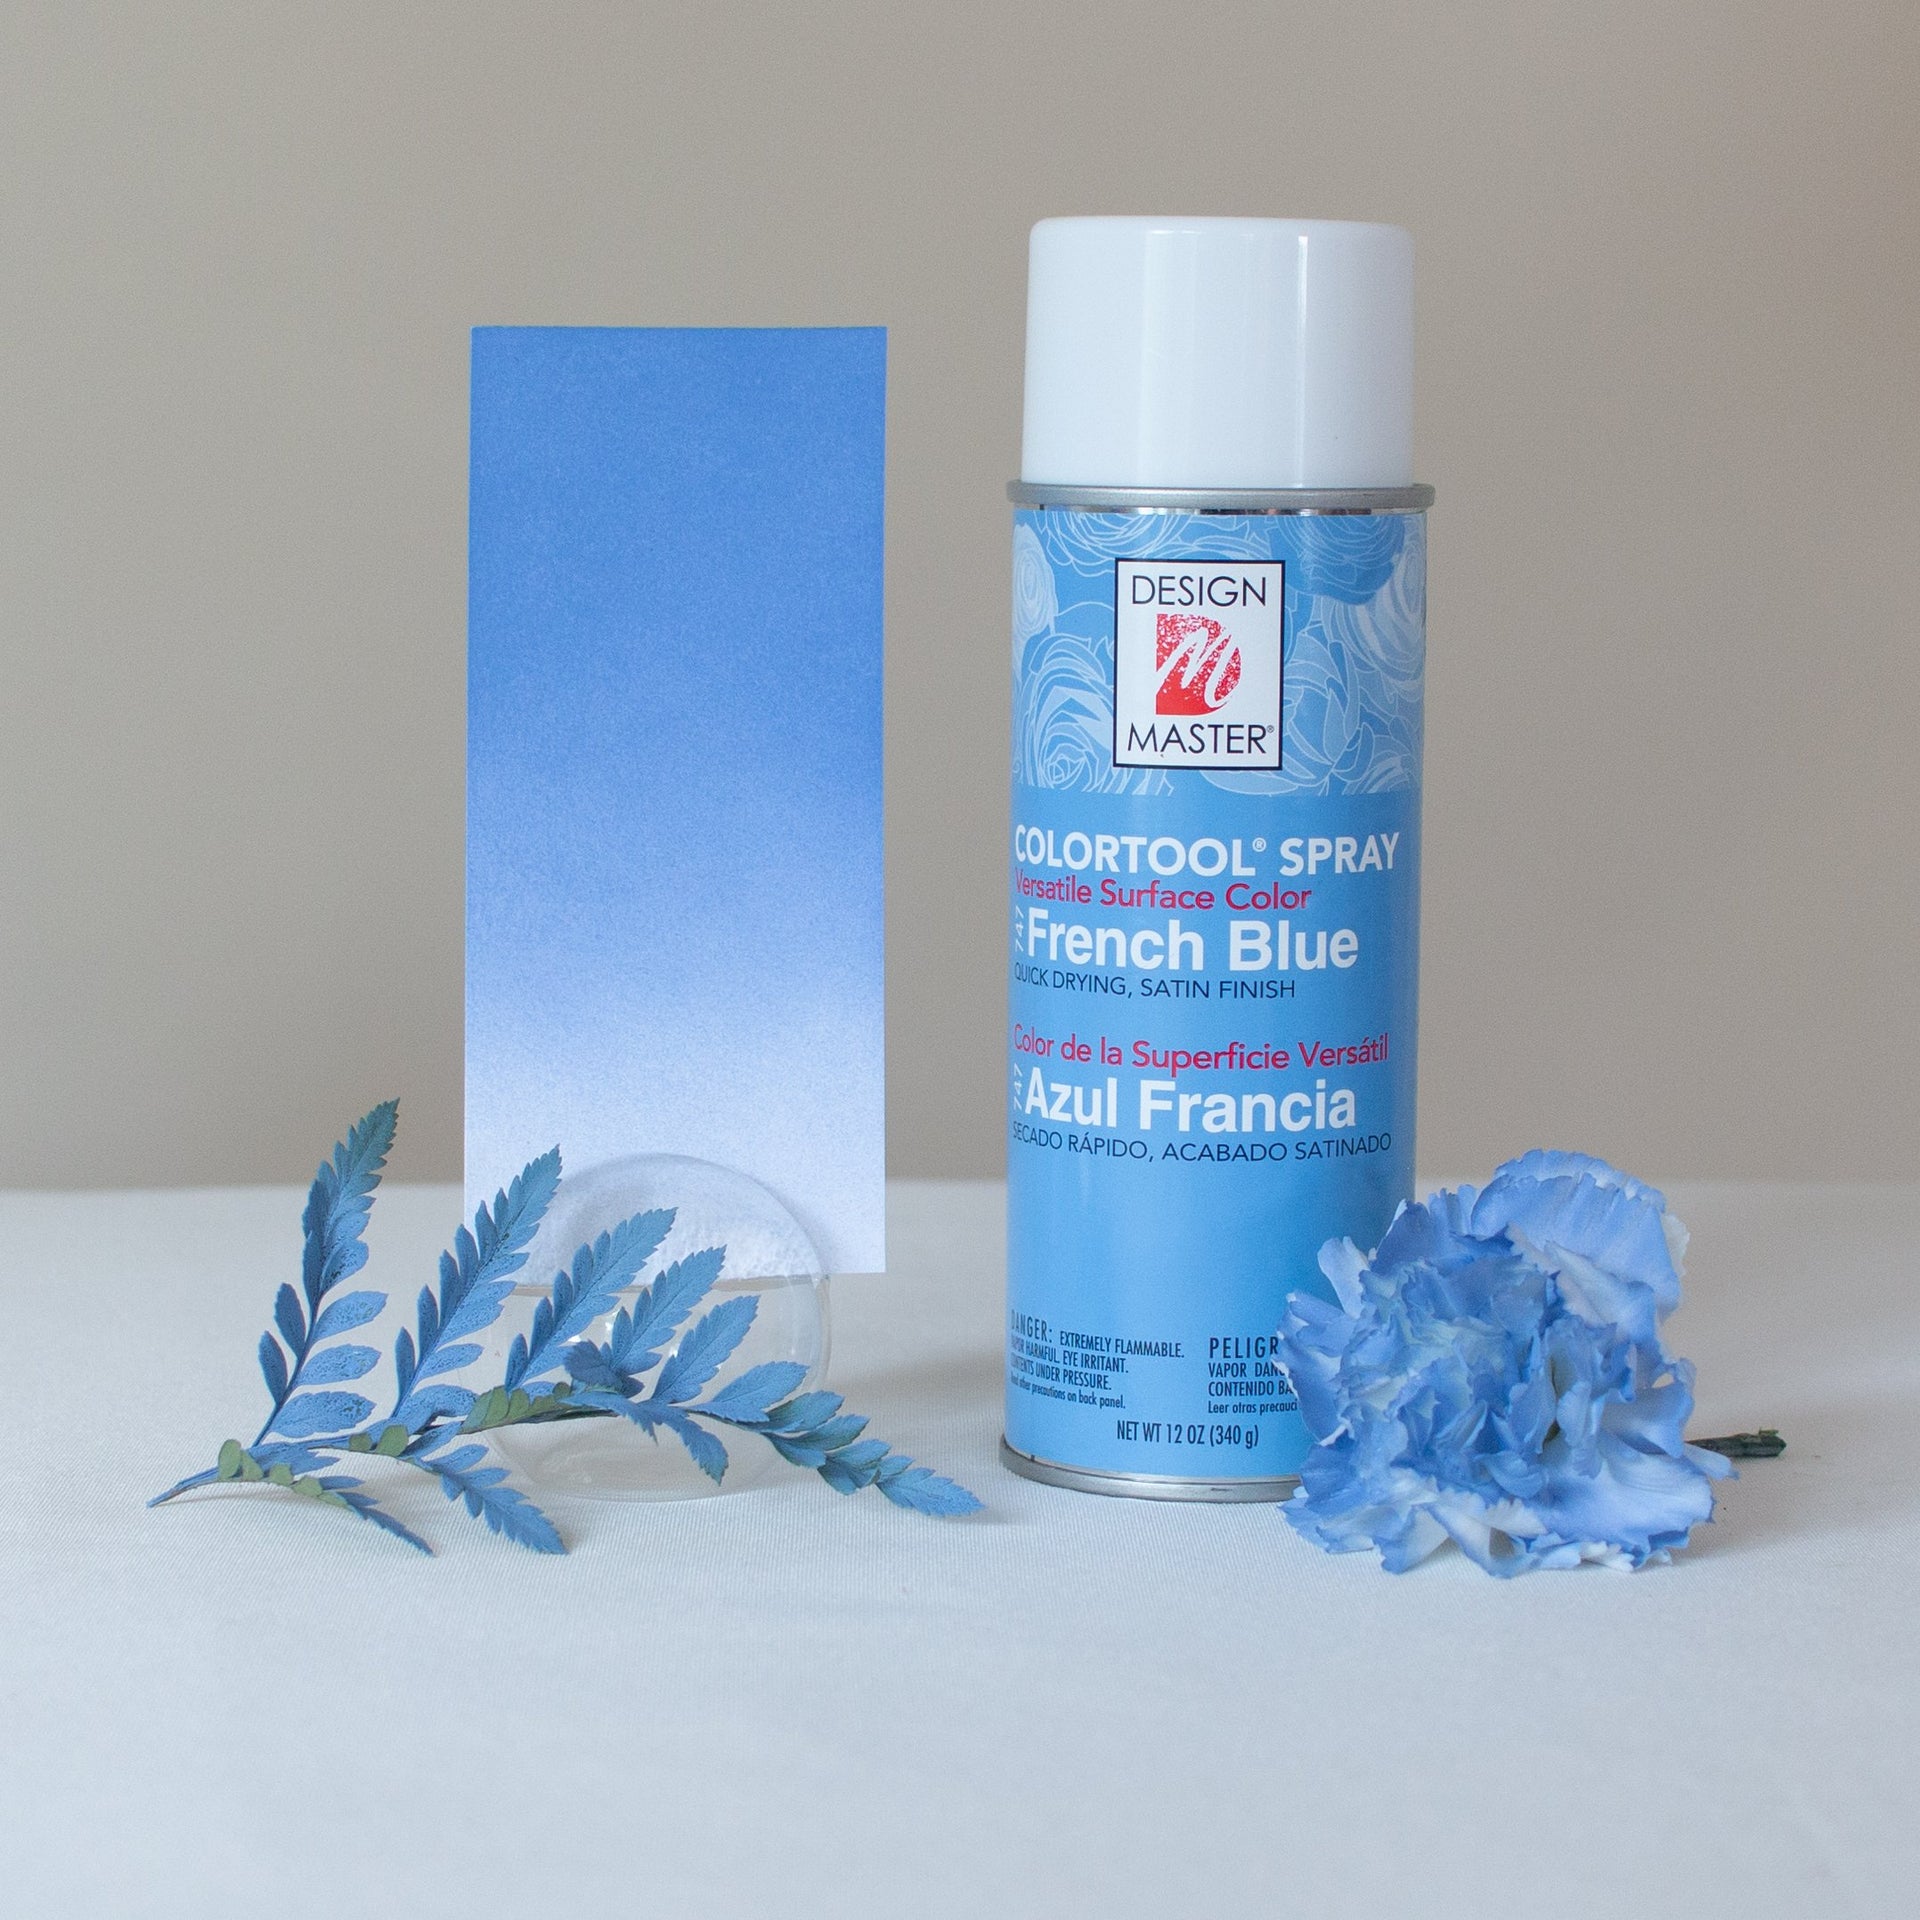 SPRAY JUST FOR FLOWERS DESIGN MASTER #135, BLUE… - Fleurexpert